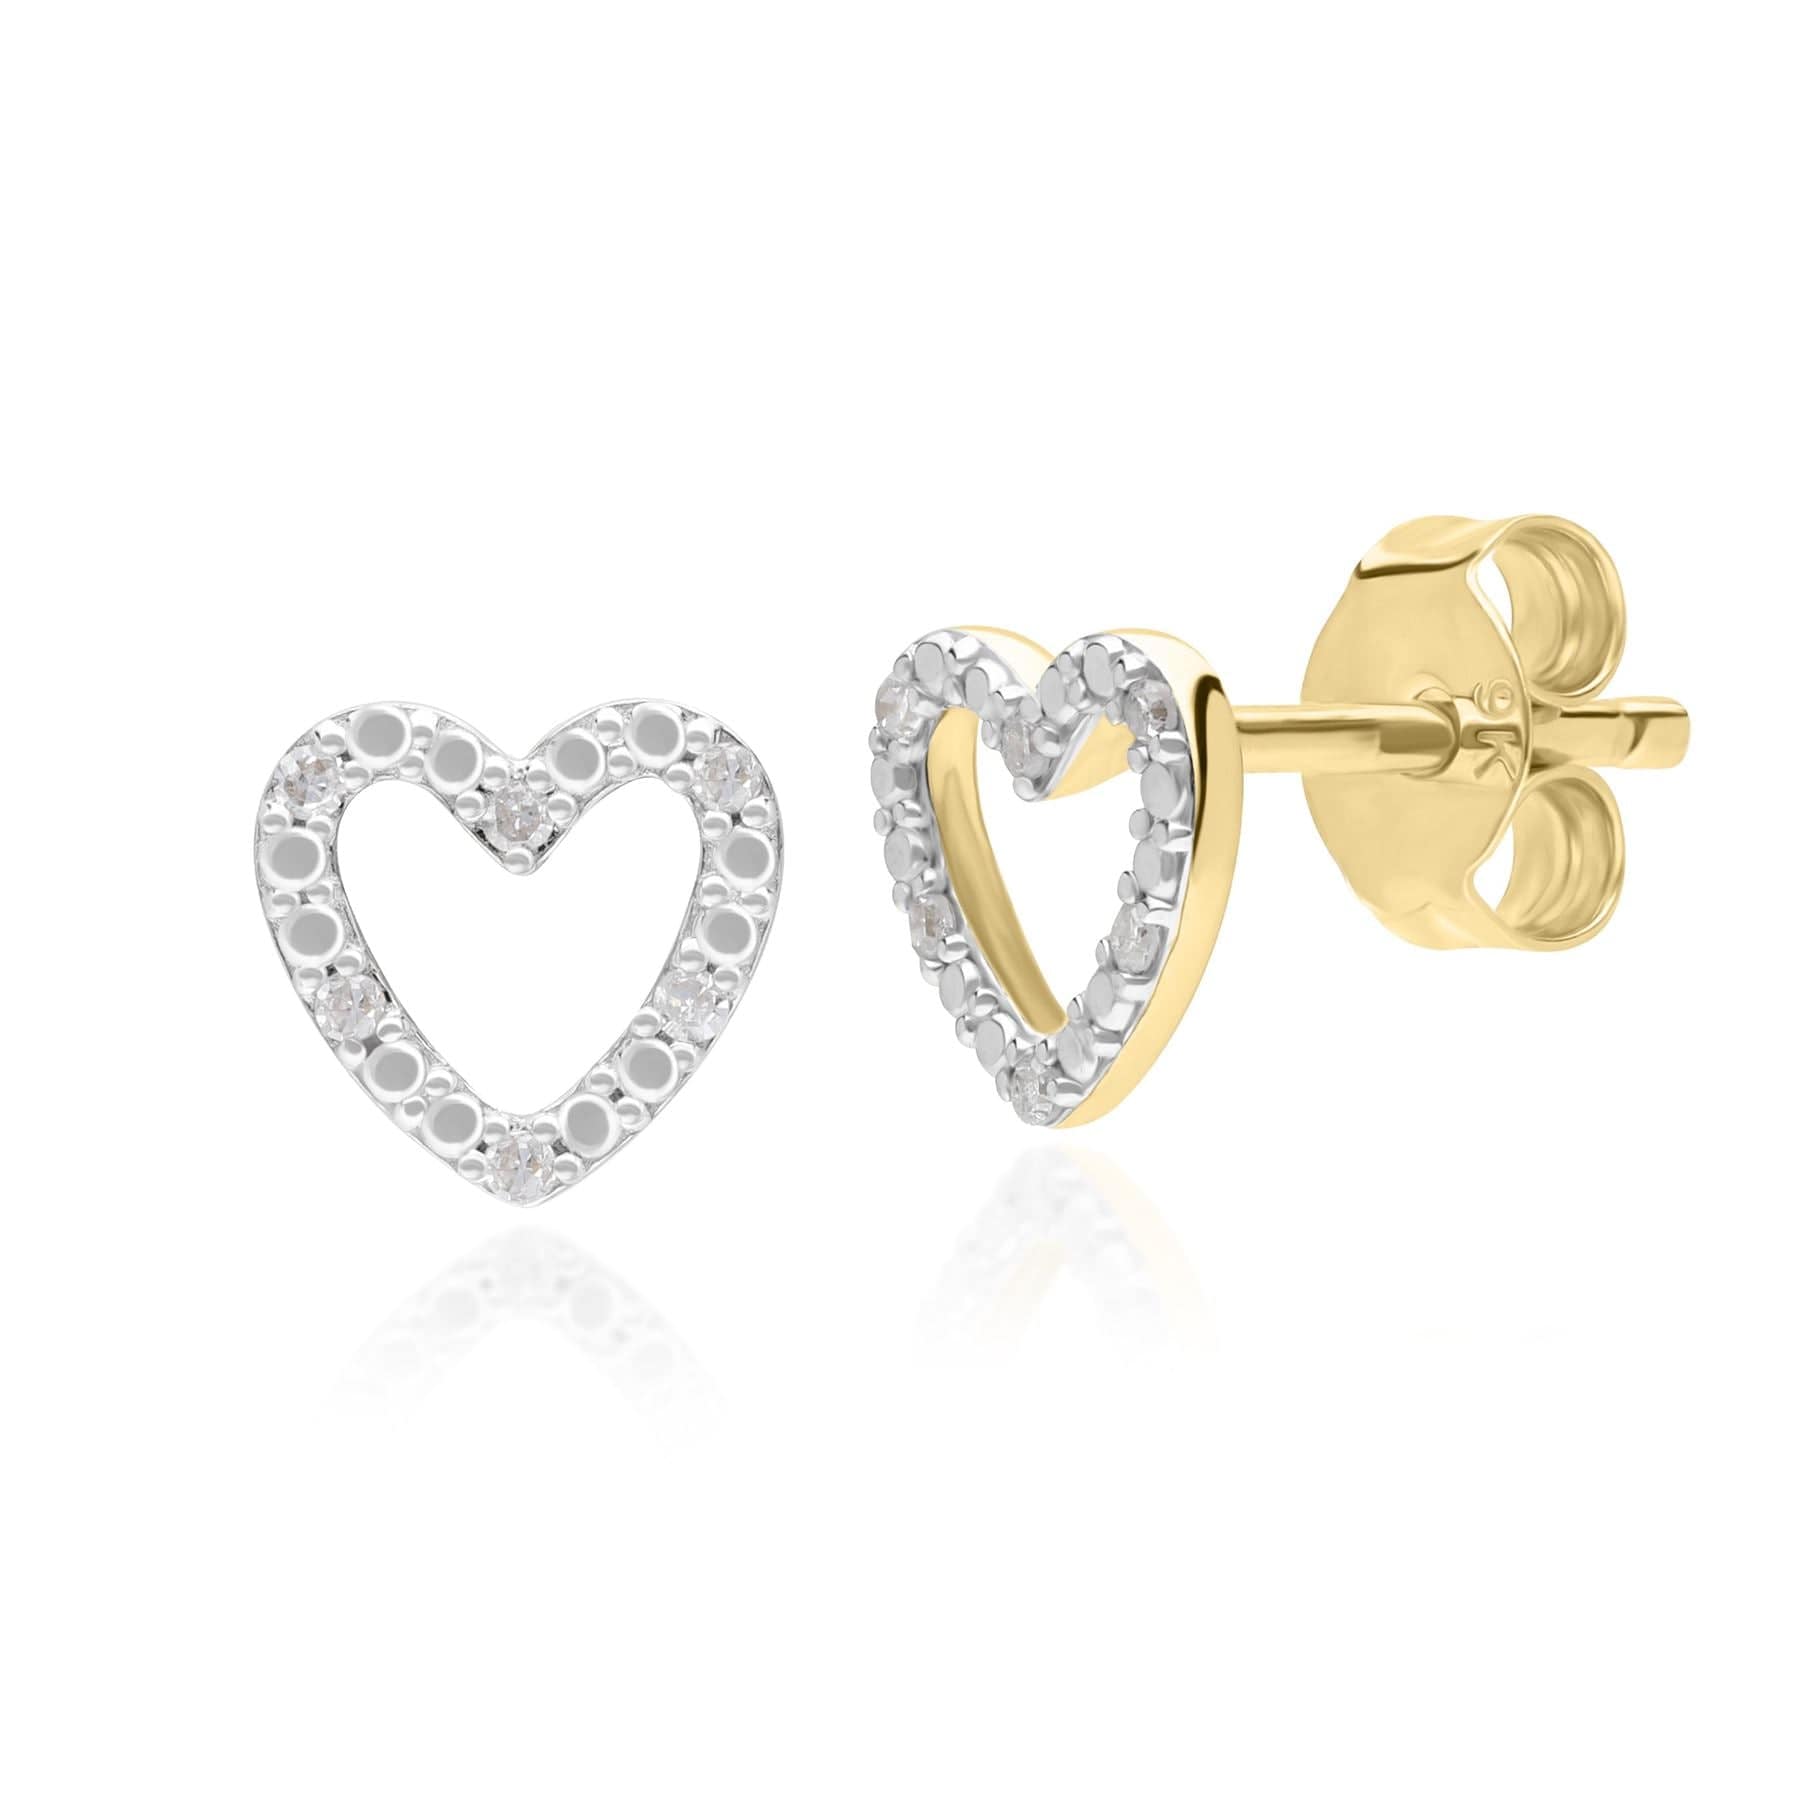 191E0432019 Diamond Love Heart Stud Earrings in 9ct Yellow Gold Front